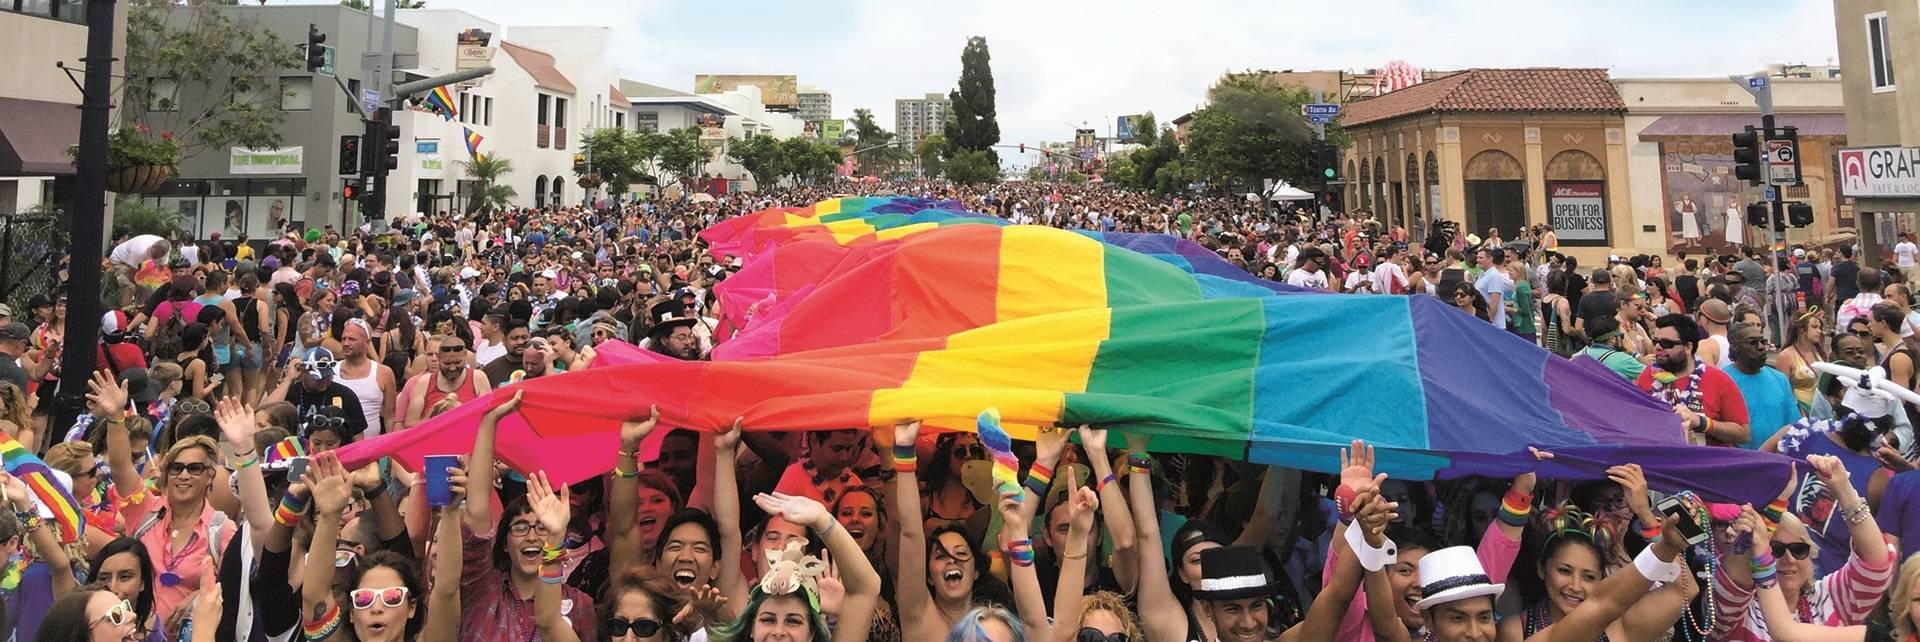 gay pride san diego 2018 statistics